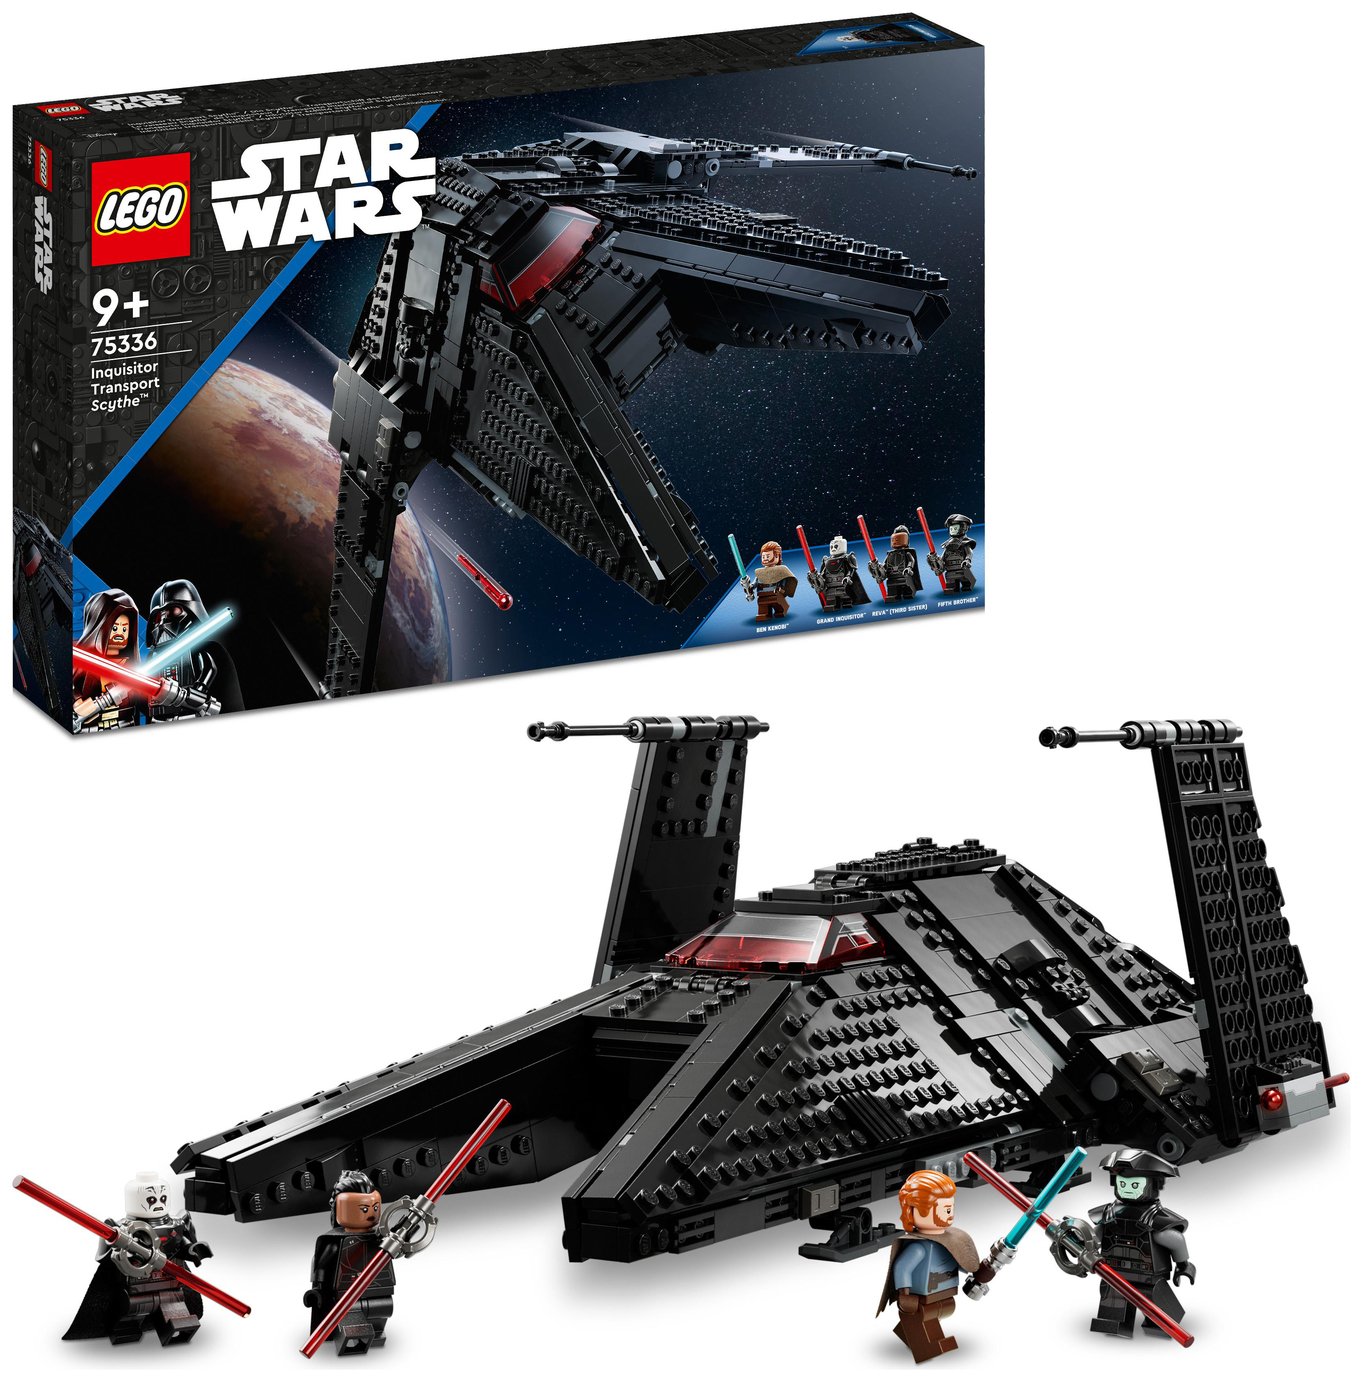 LEGO Star Wars Inquisitor Transport Scythe Toy Set 75336